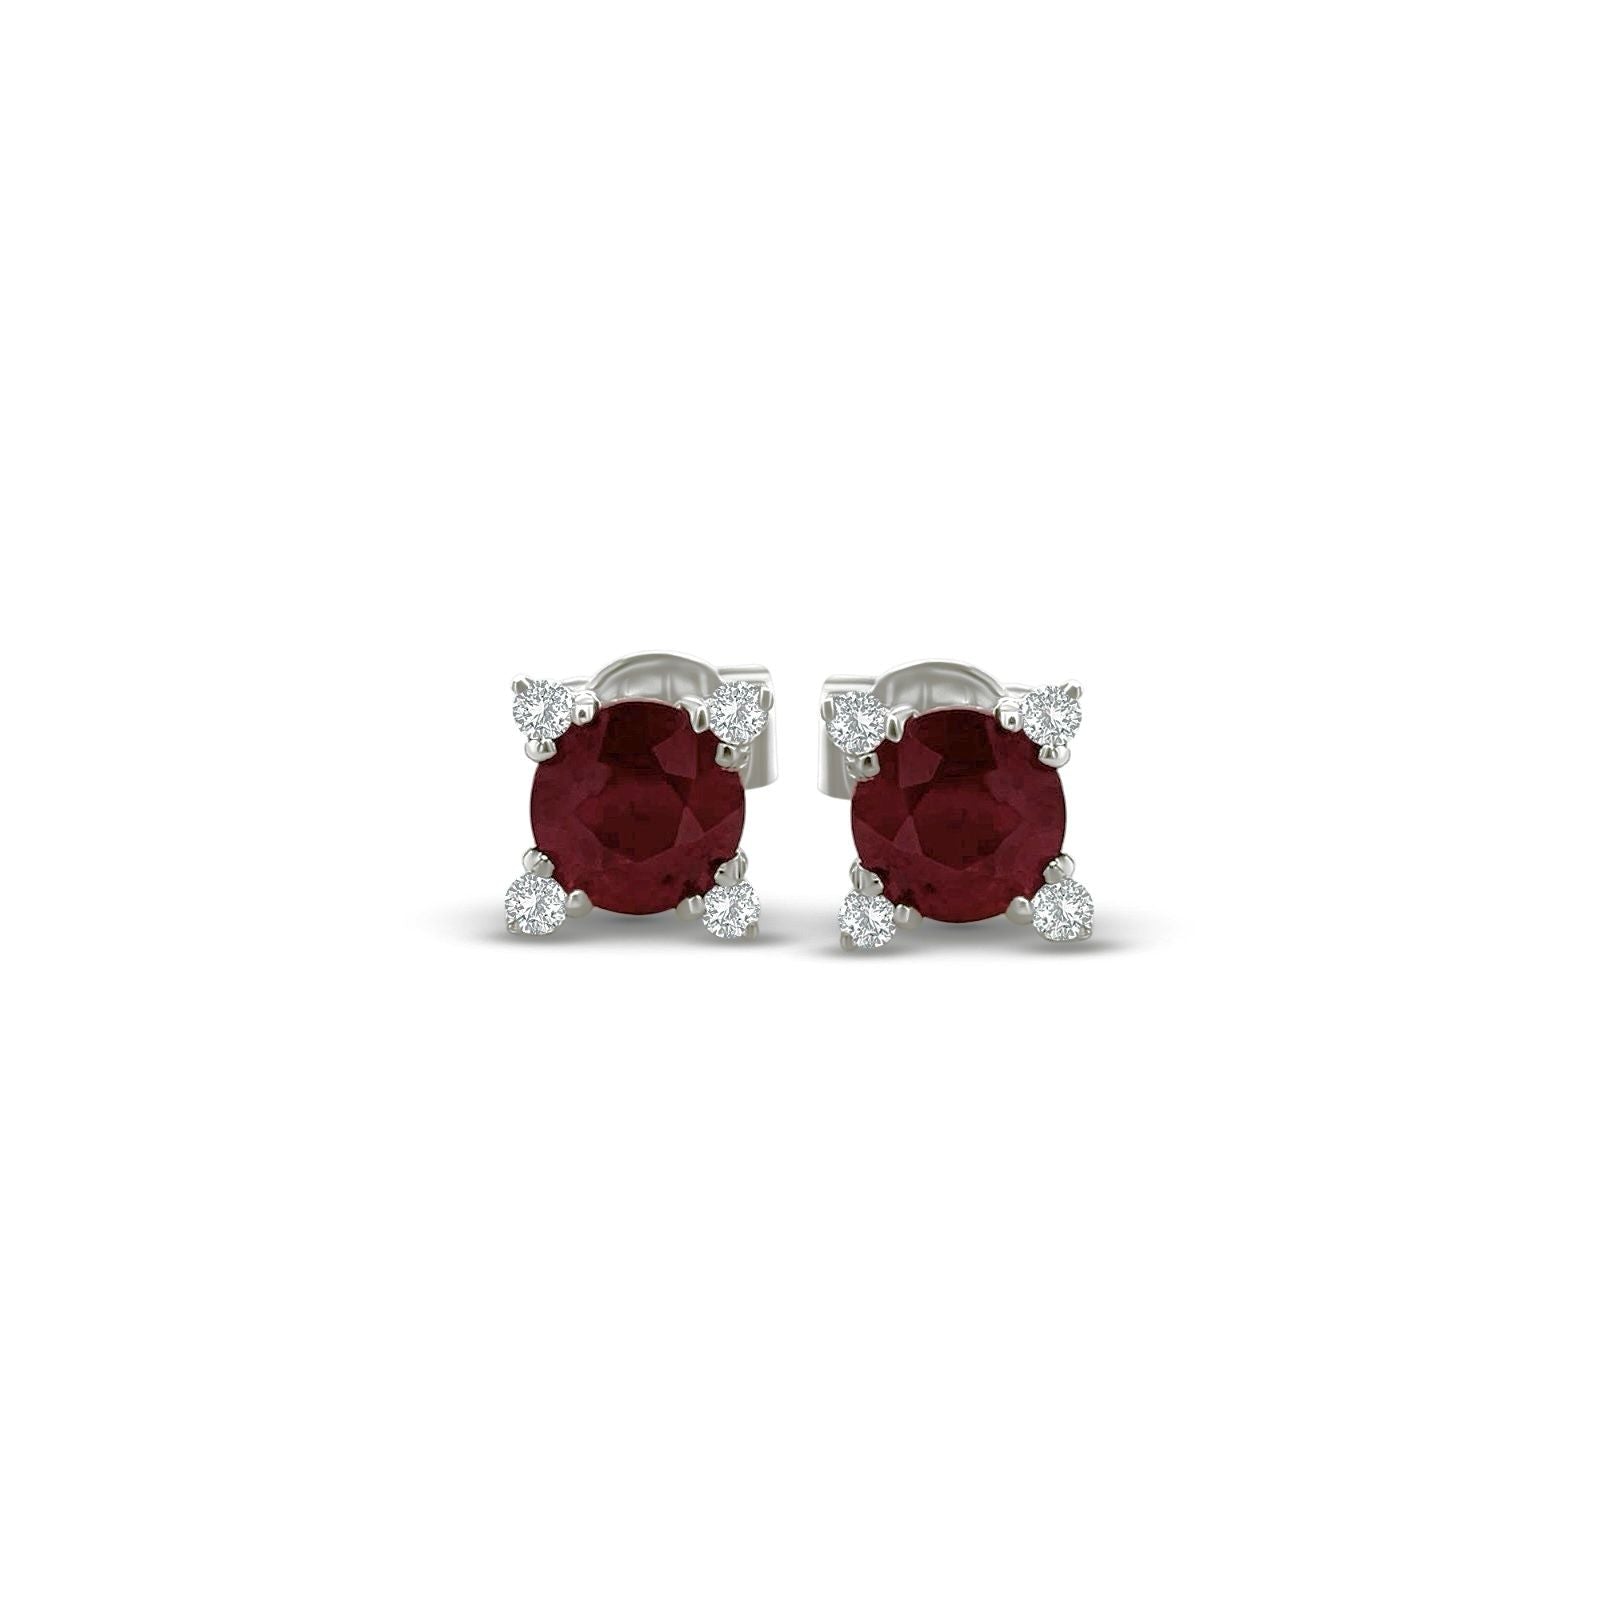  Round Ruby & Diamond Stud Earrings: Round Ruby Stud Earrings, Diamond Stud Earrings, Ruby and Diamond Earrings, Red Gemstone Studs, Precious Stone Jewelry, Sparkling Gemstone Earrings.